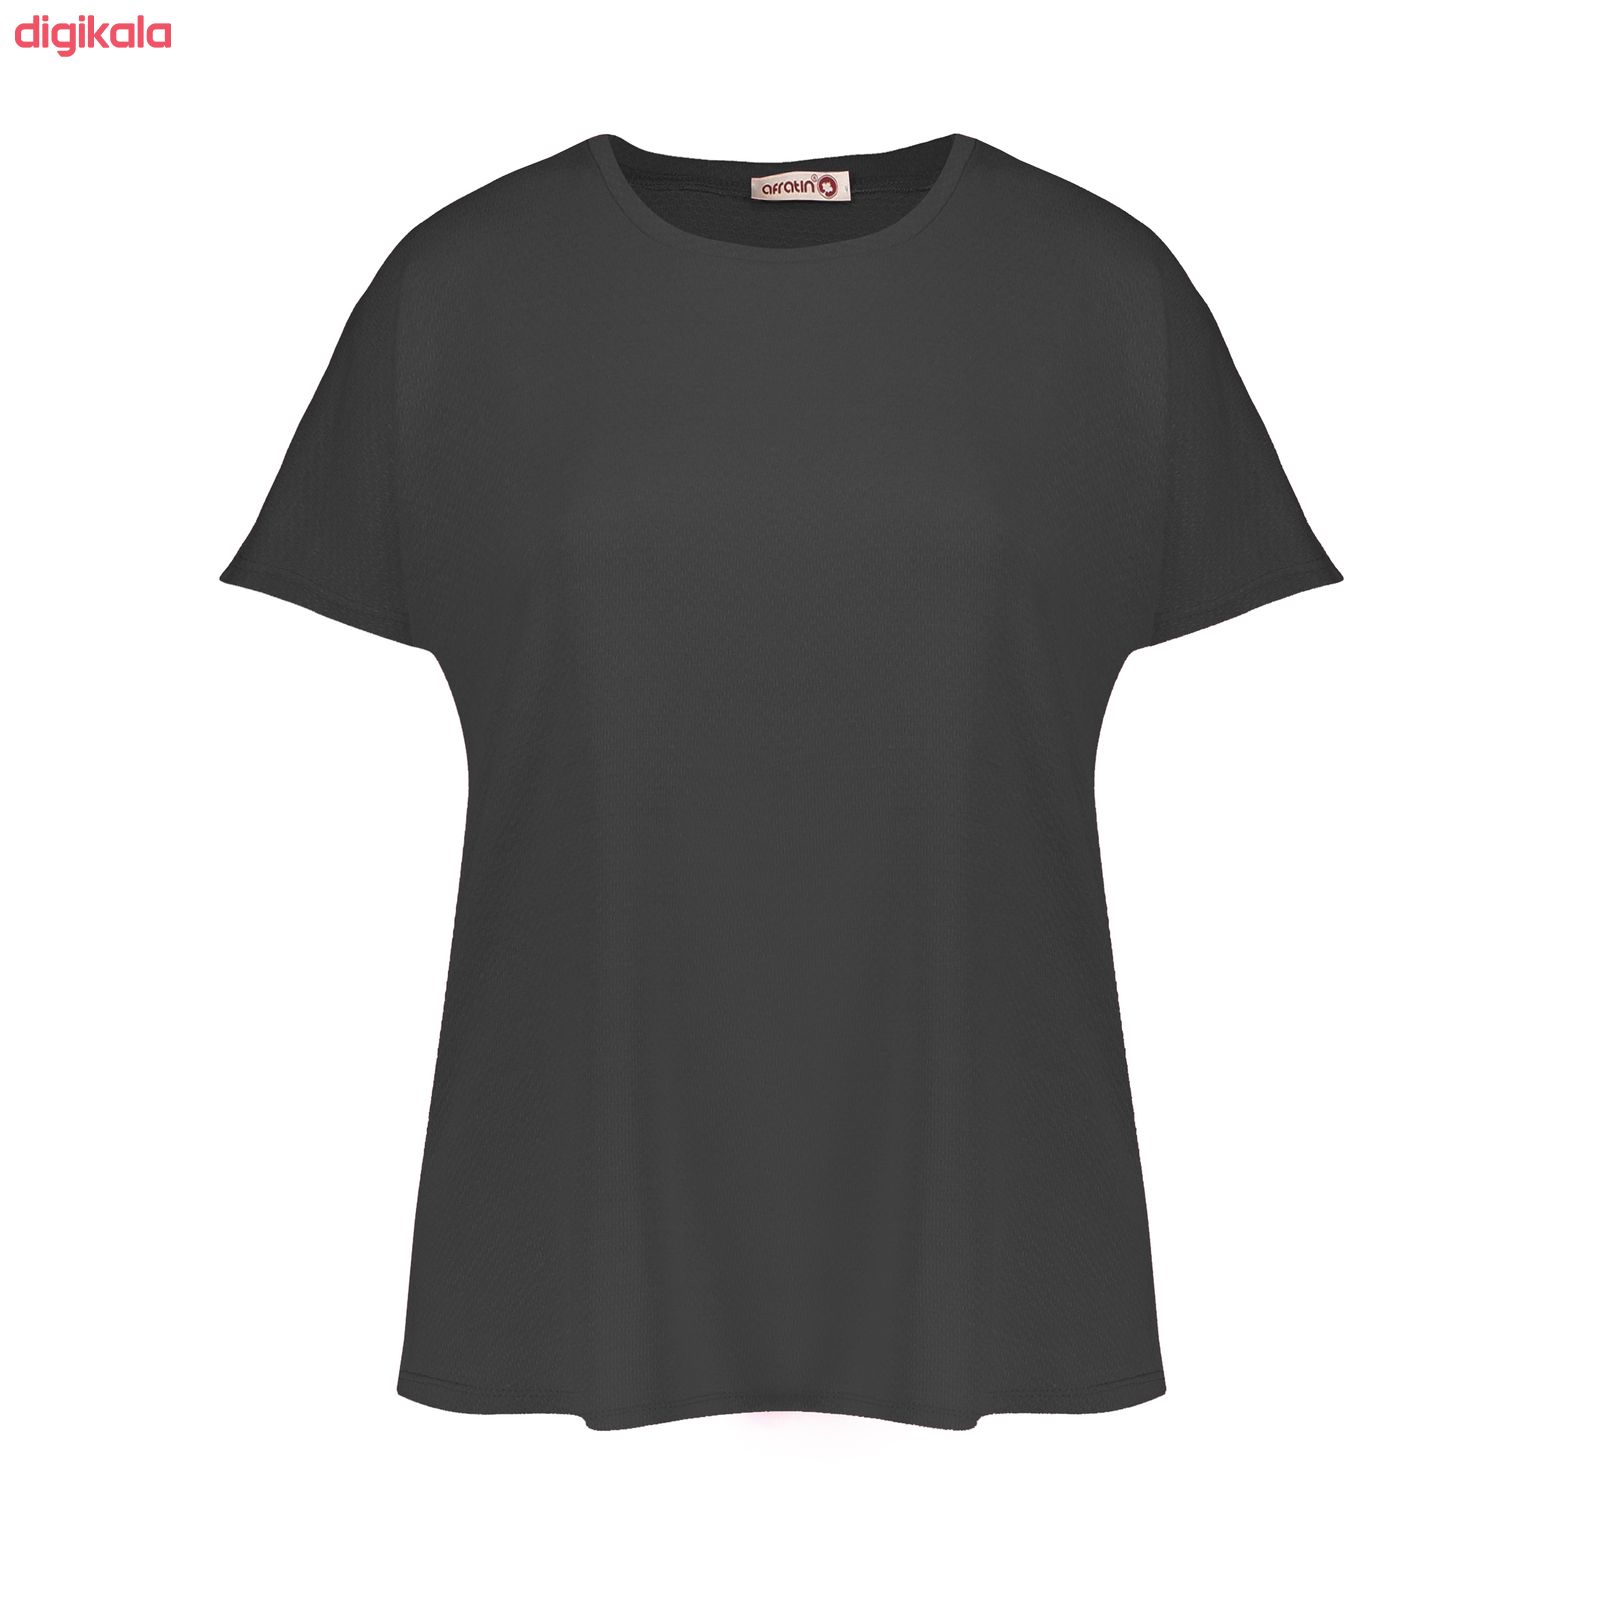  تی شرت زنانه افراتین کد 7509 رنگ مشکی